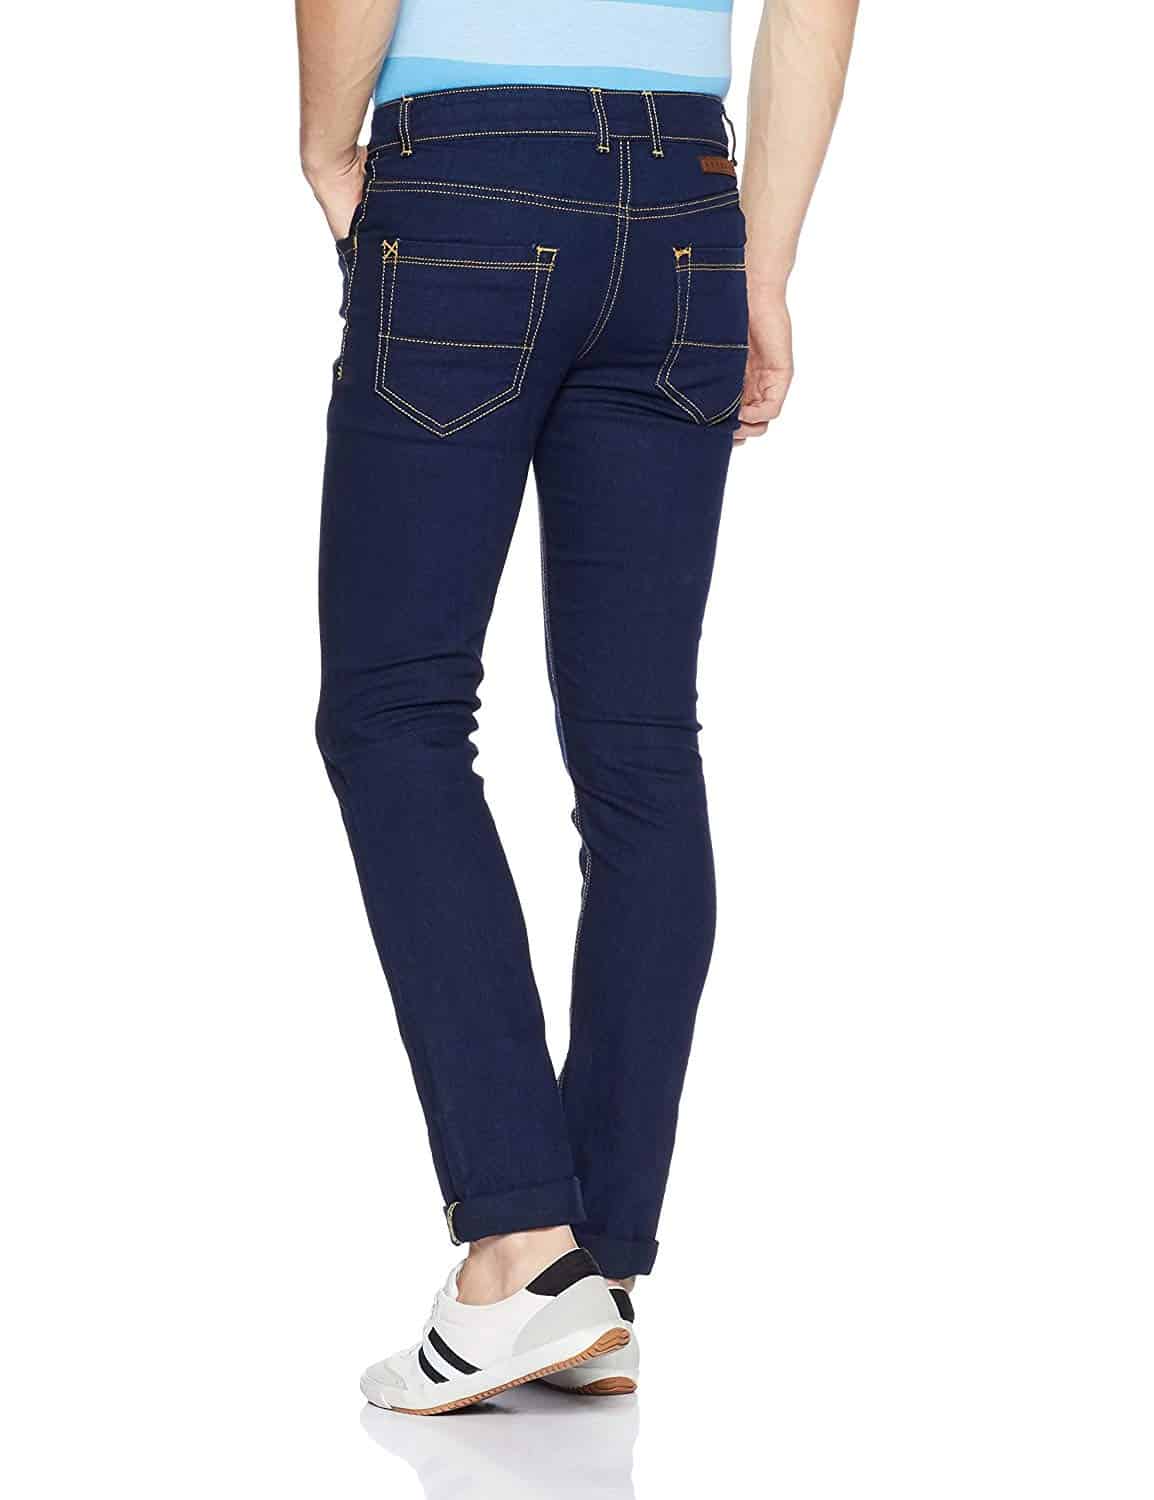 deep blue denim jeans